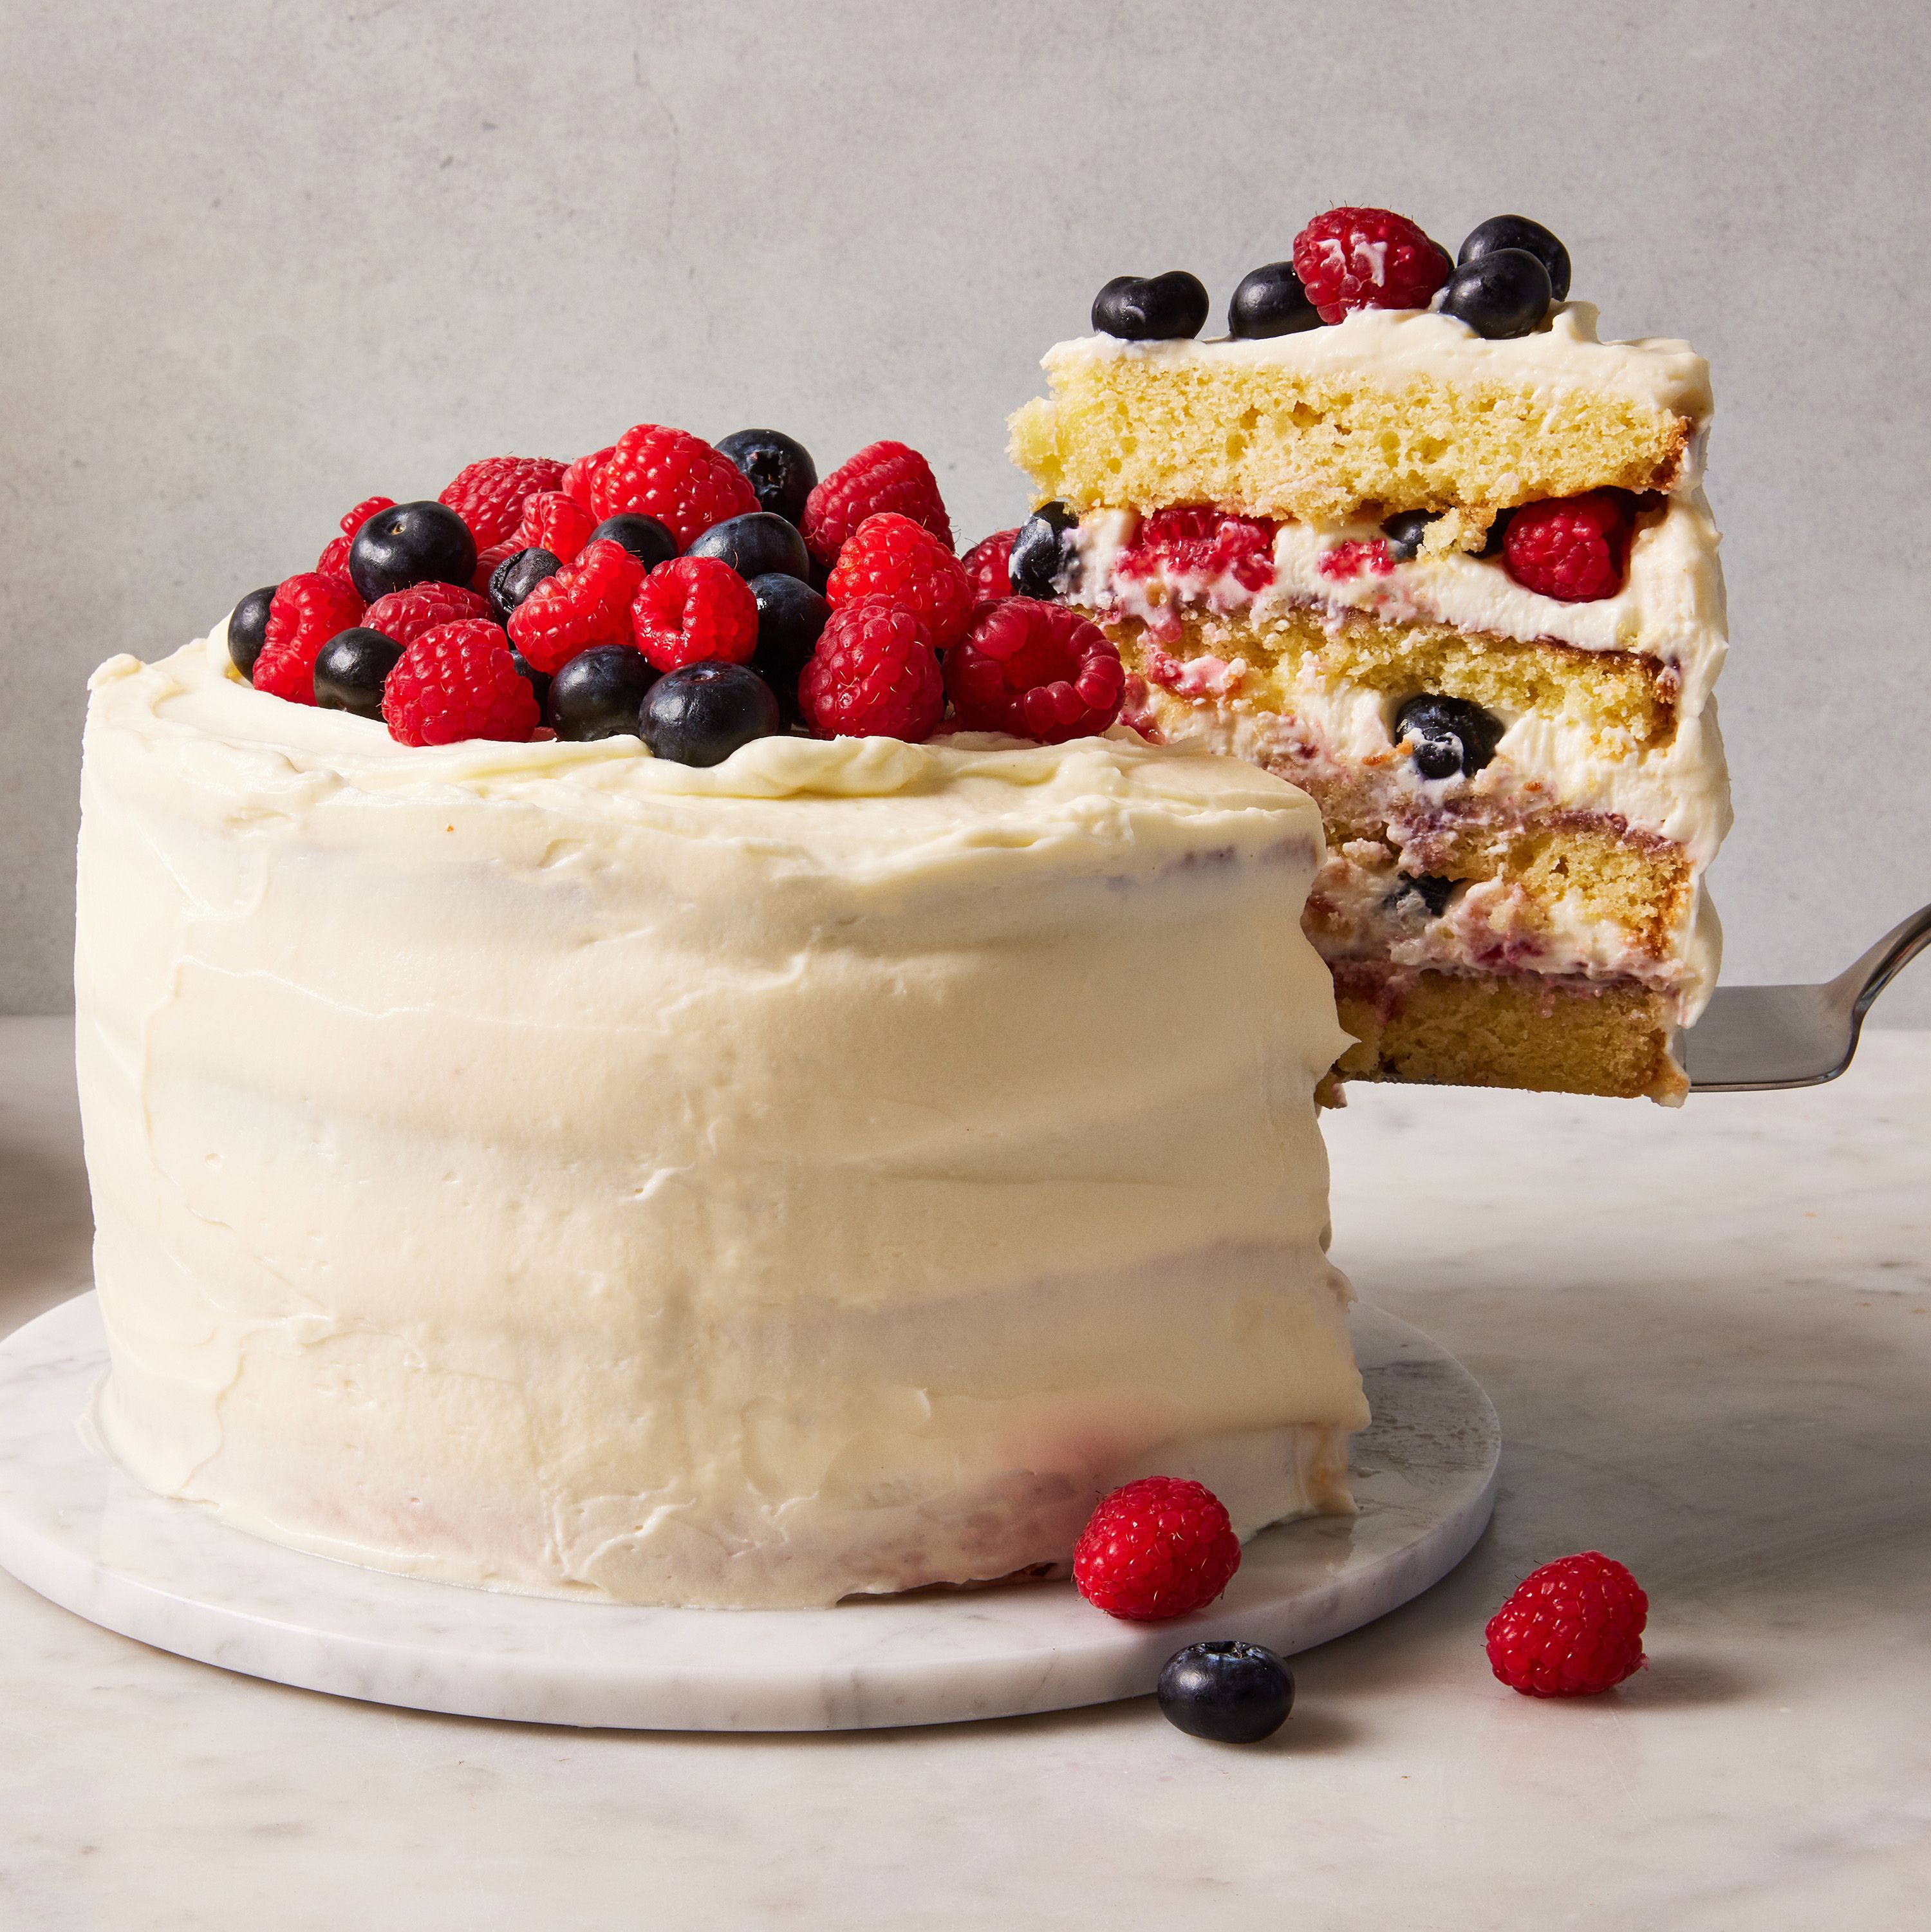 5 Star Desserts - Cake Baking